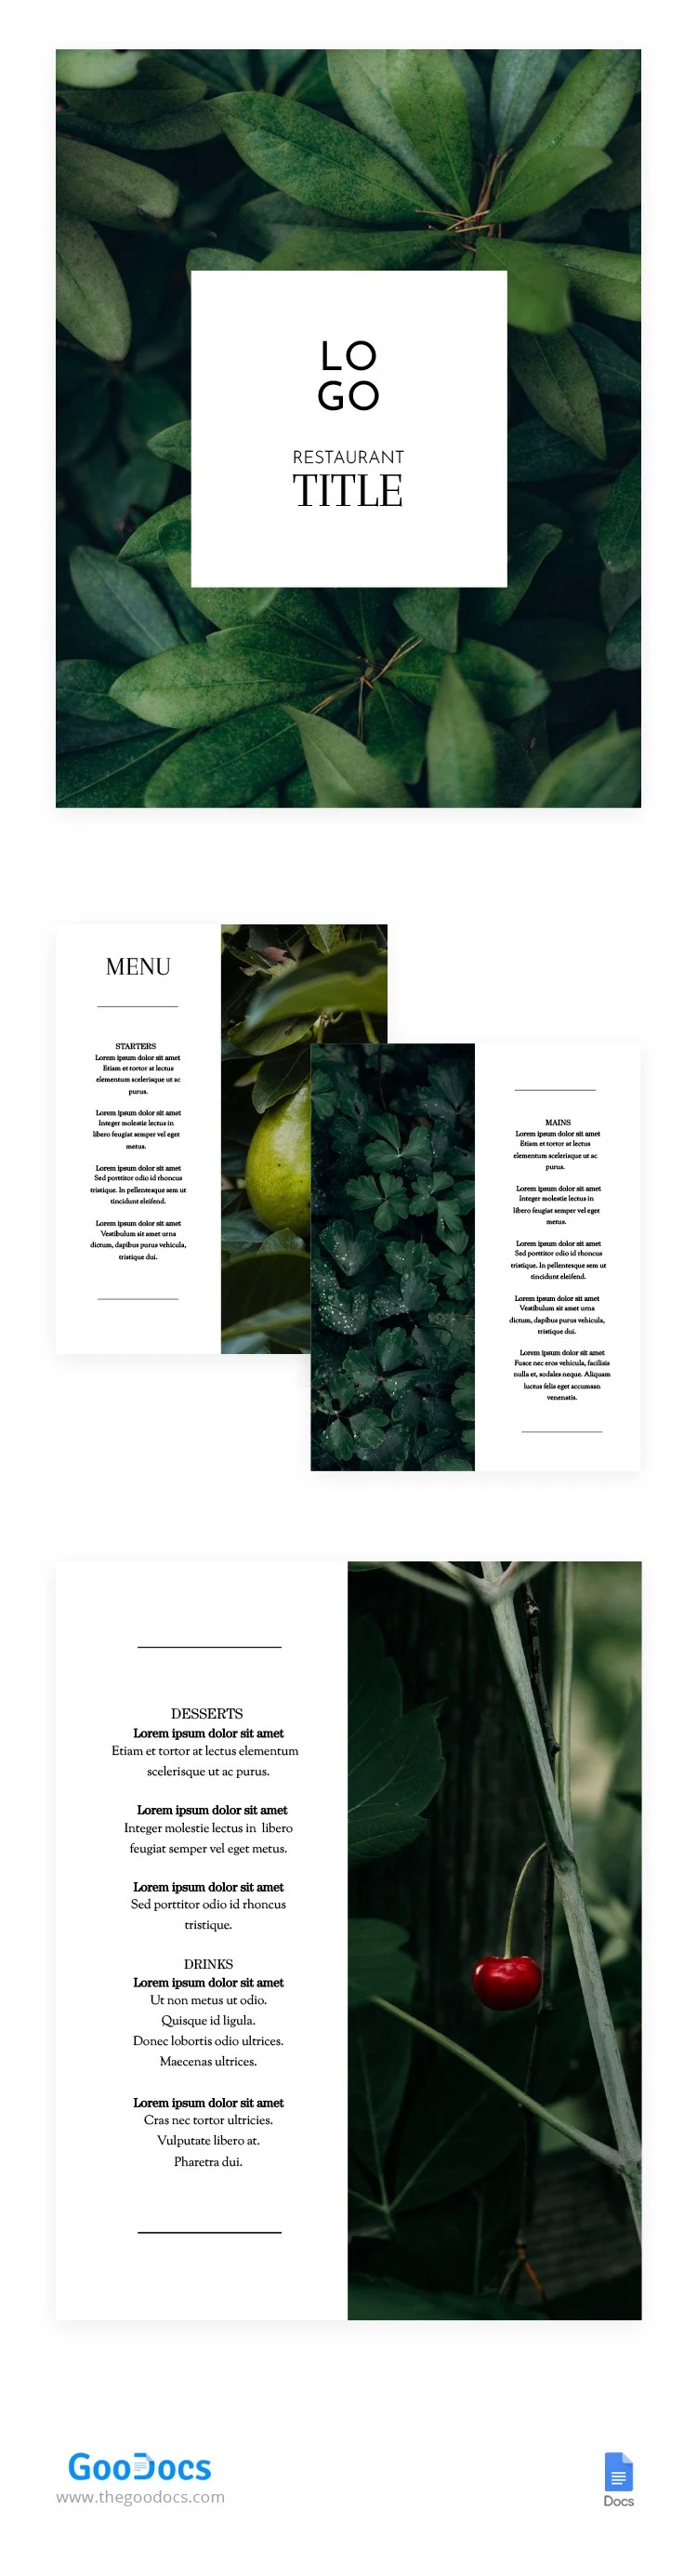 Grande menu del ristorante - free Google Docs Template - 10062460